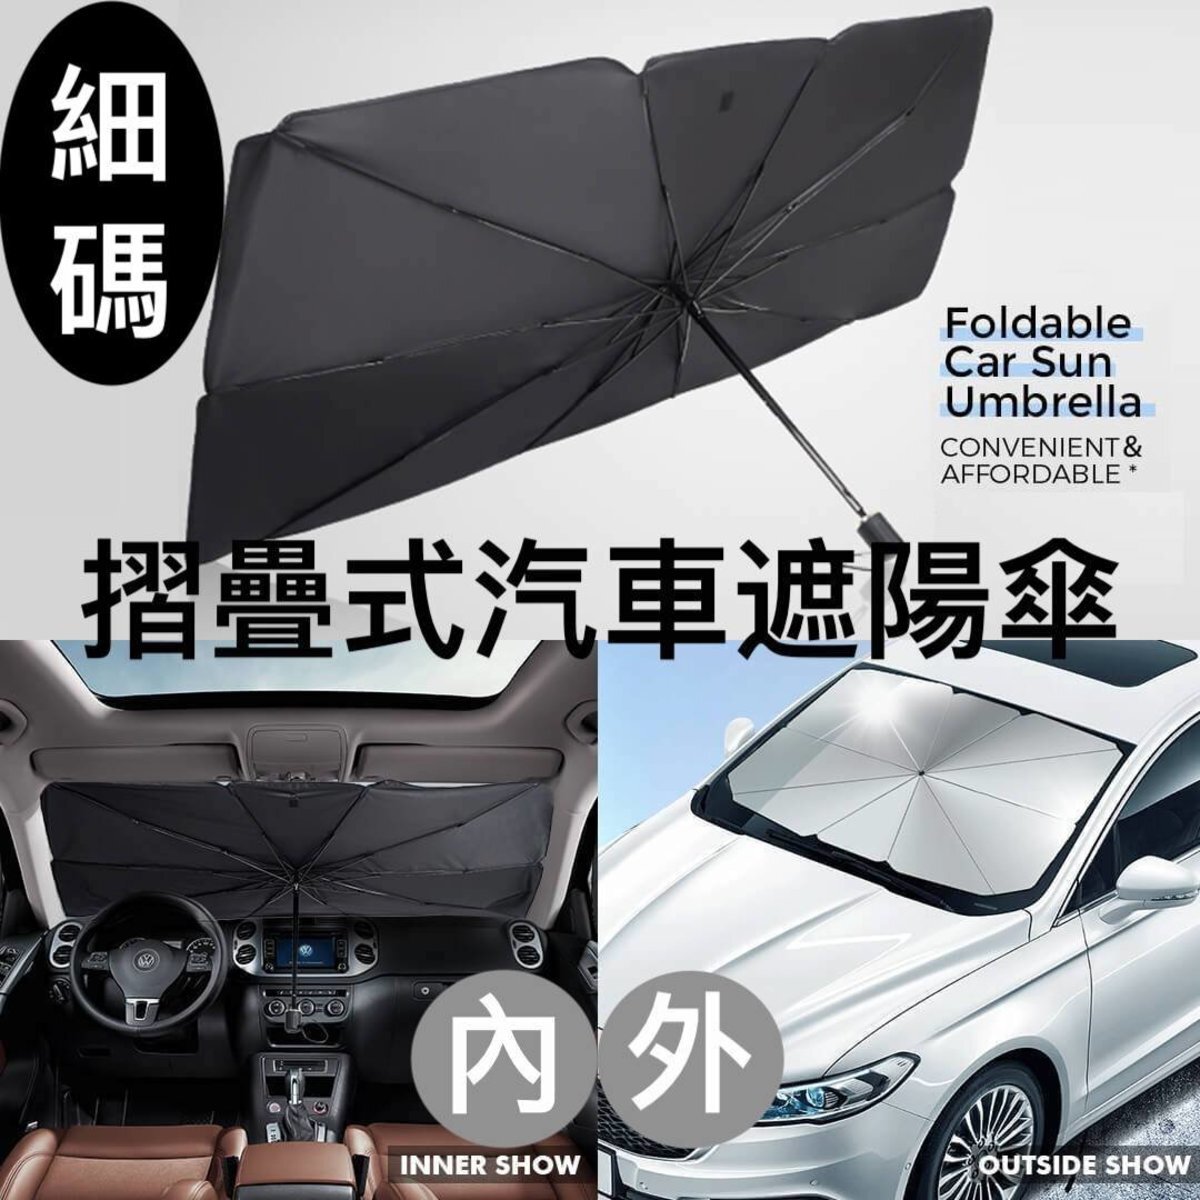 Small-Foldable Car Sun Umbrella